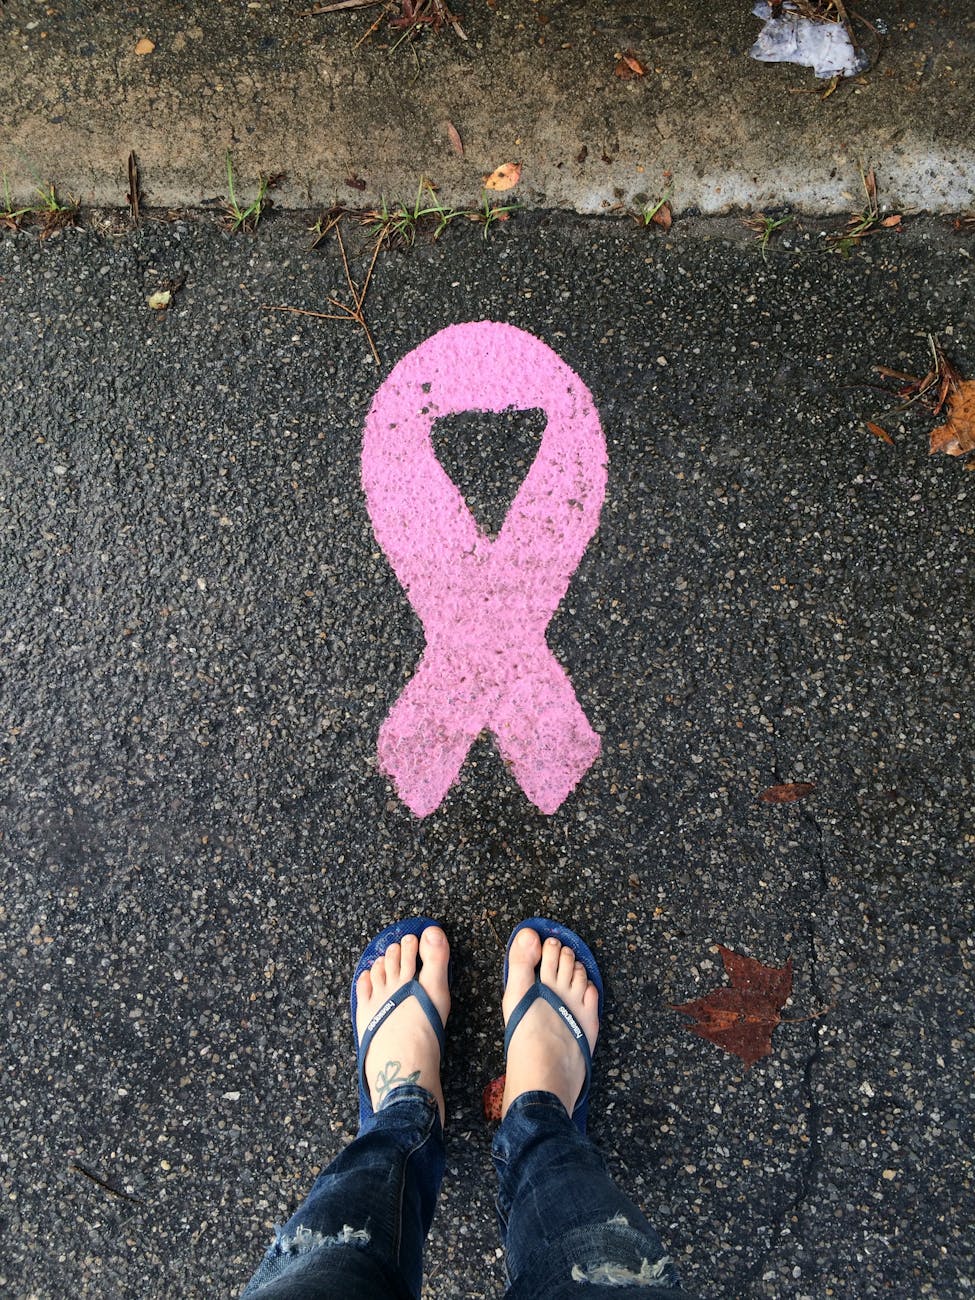 person legs near cancer awareness pink ribbon on asphalt